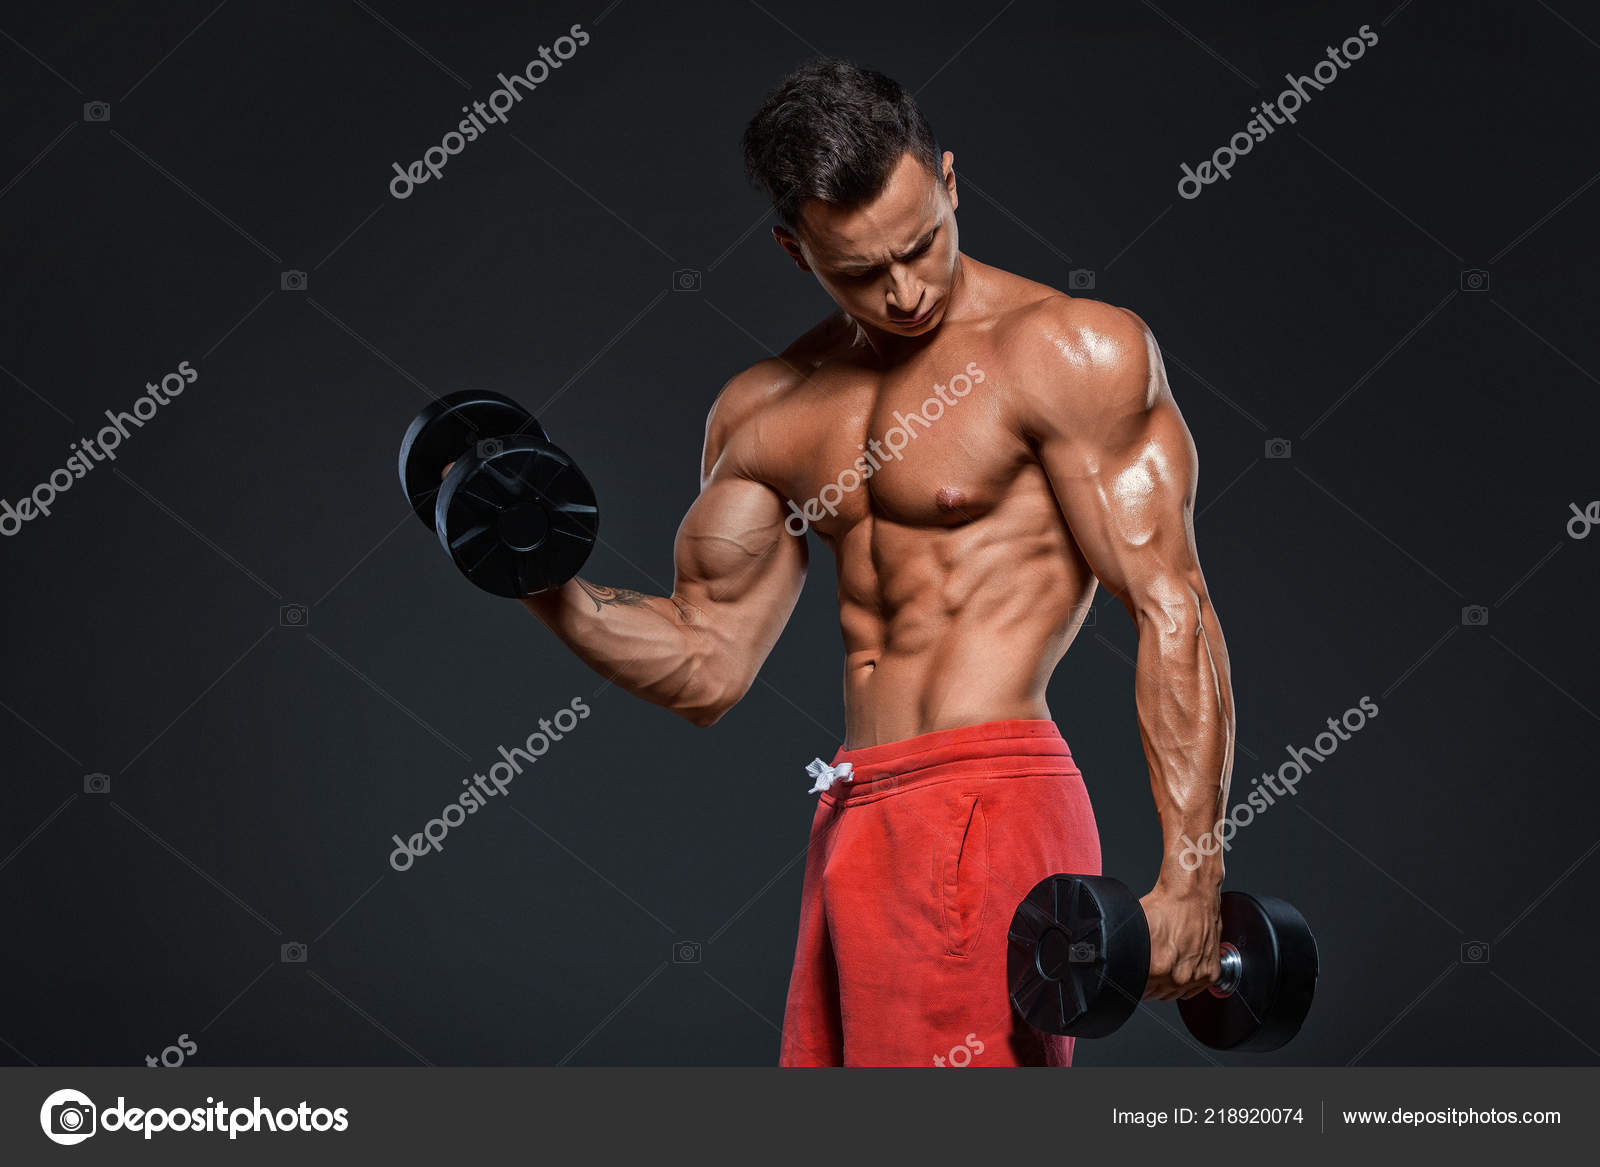 https://st4.depositphotos.com/2972641/21892/i/1600/depositphotos_218920074-stock-photo-bodybuilder-weightlifter-ideal-body-coaching.jpg